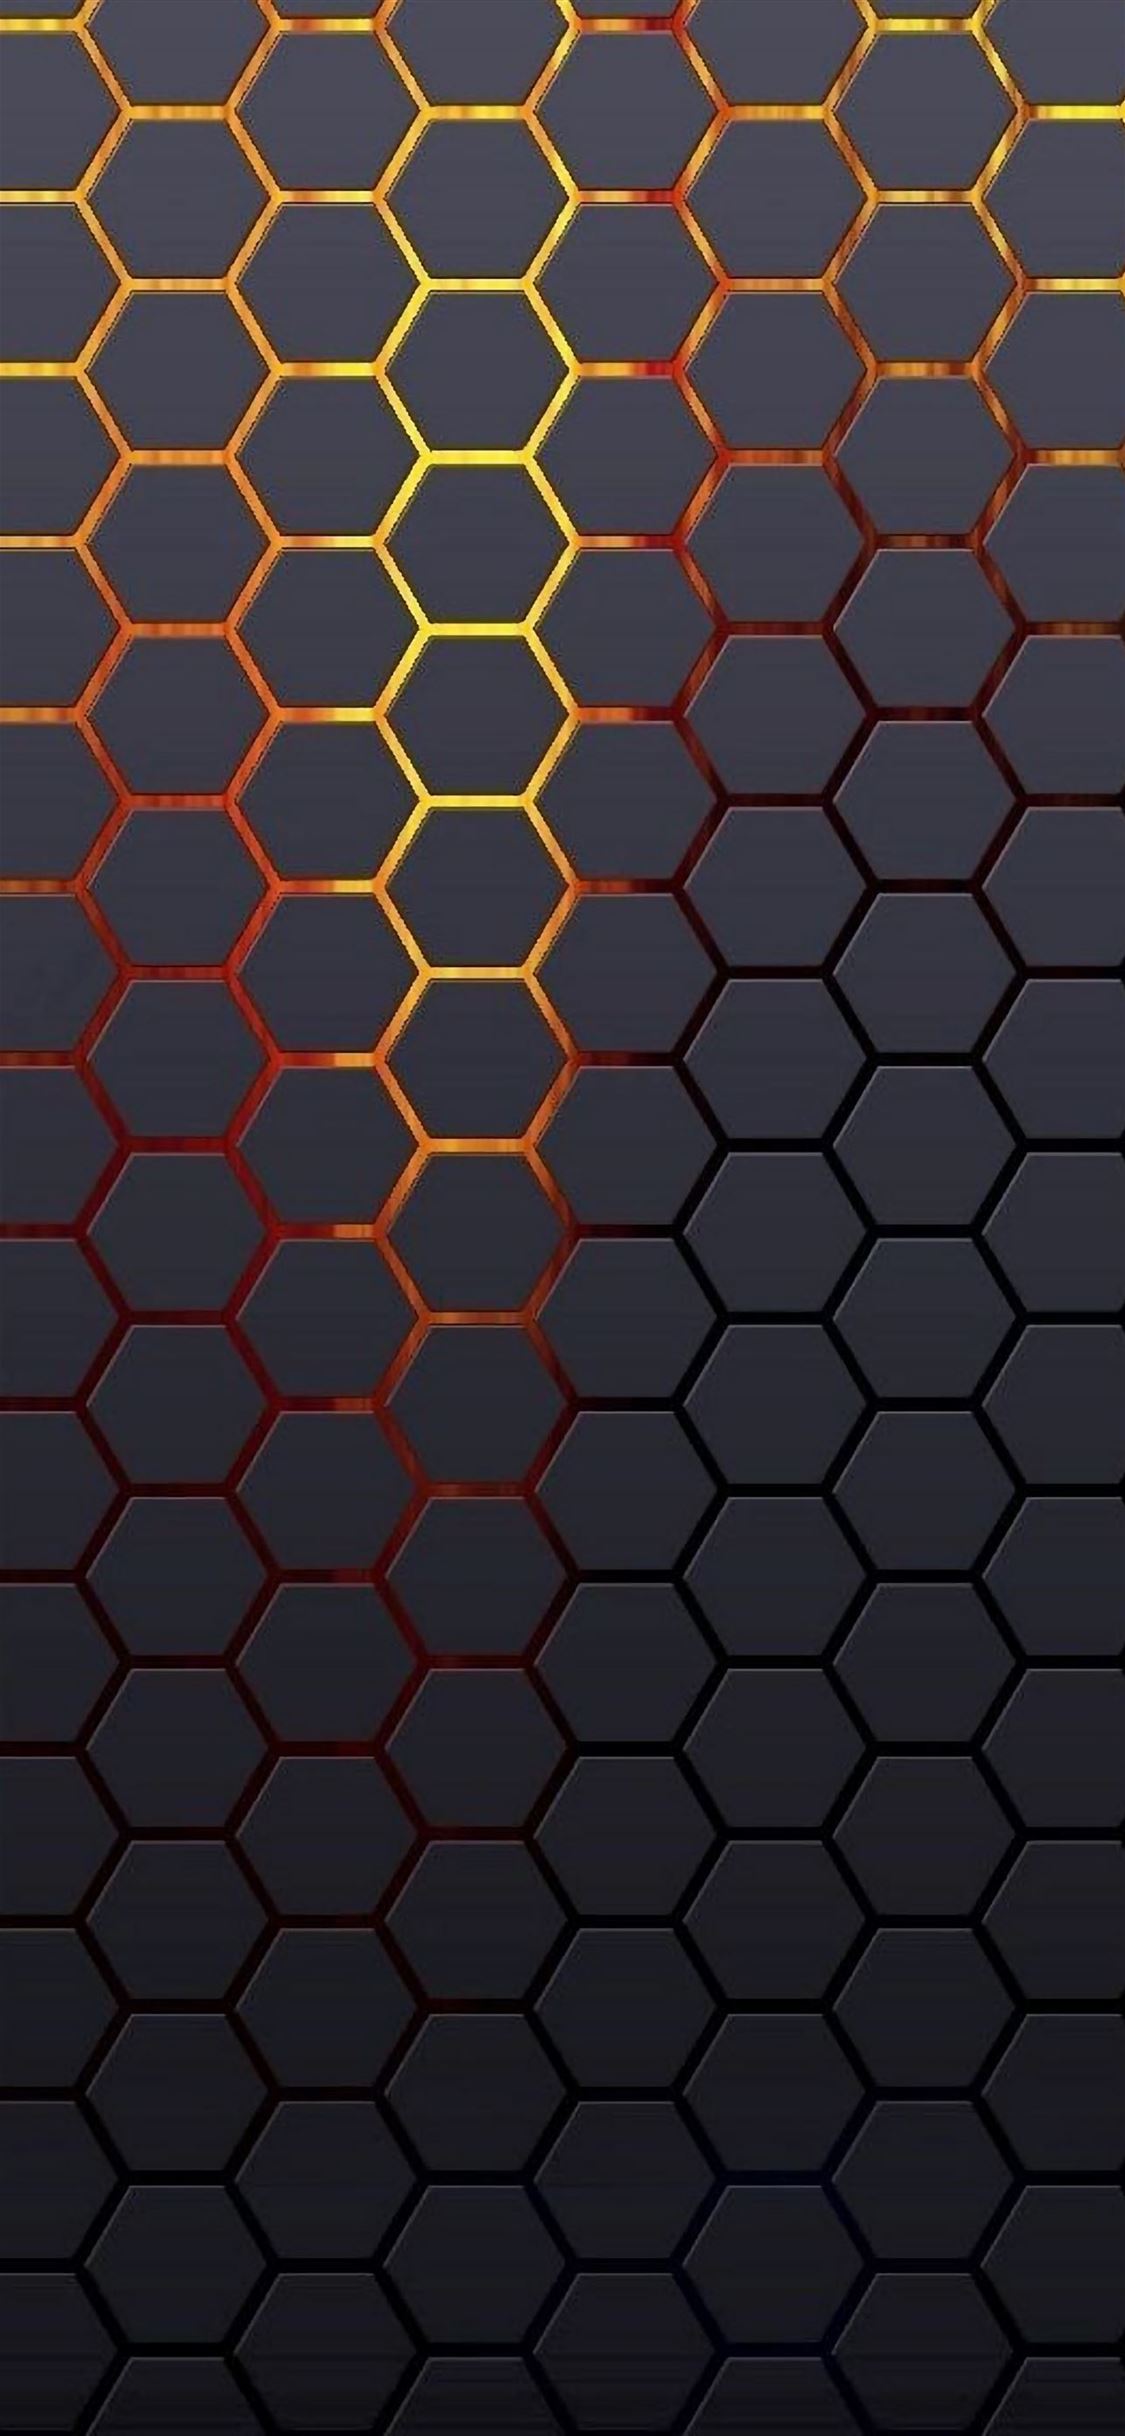 Hexagonal Grid Background iPhone wallpaper 